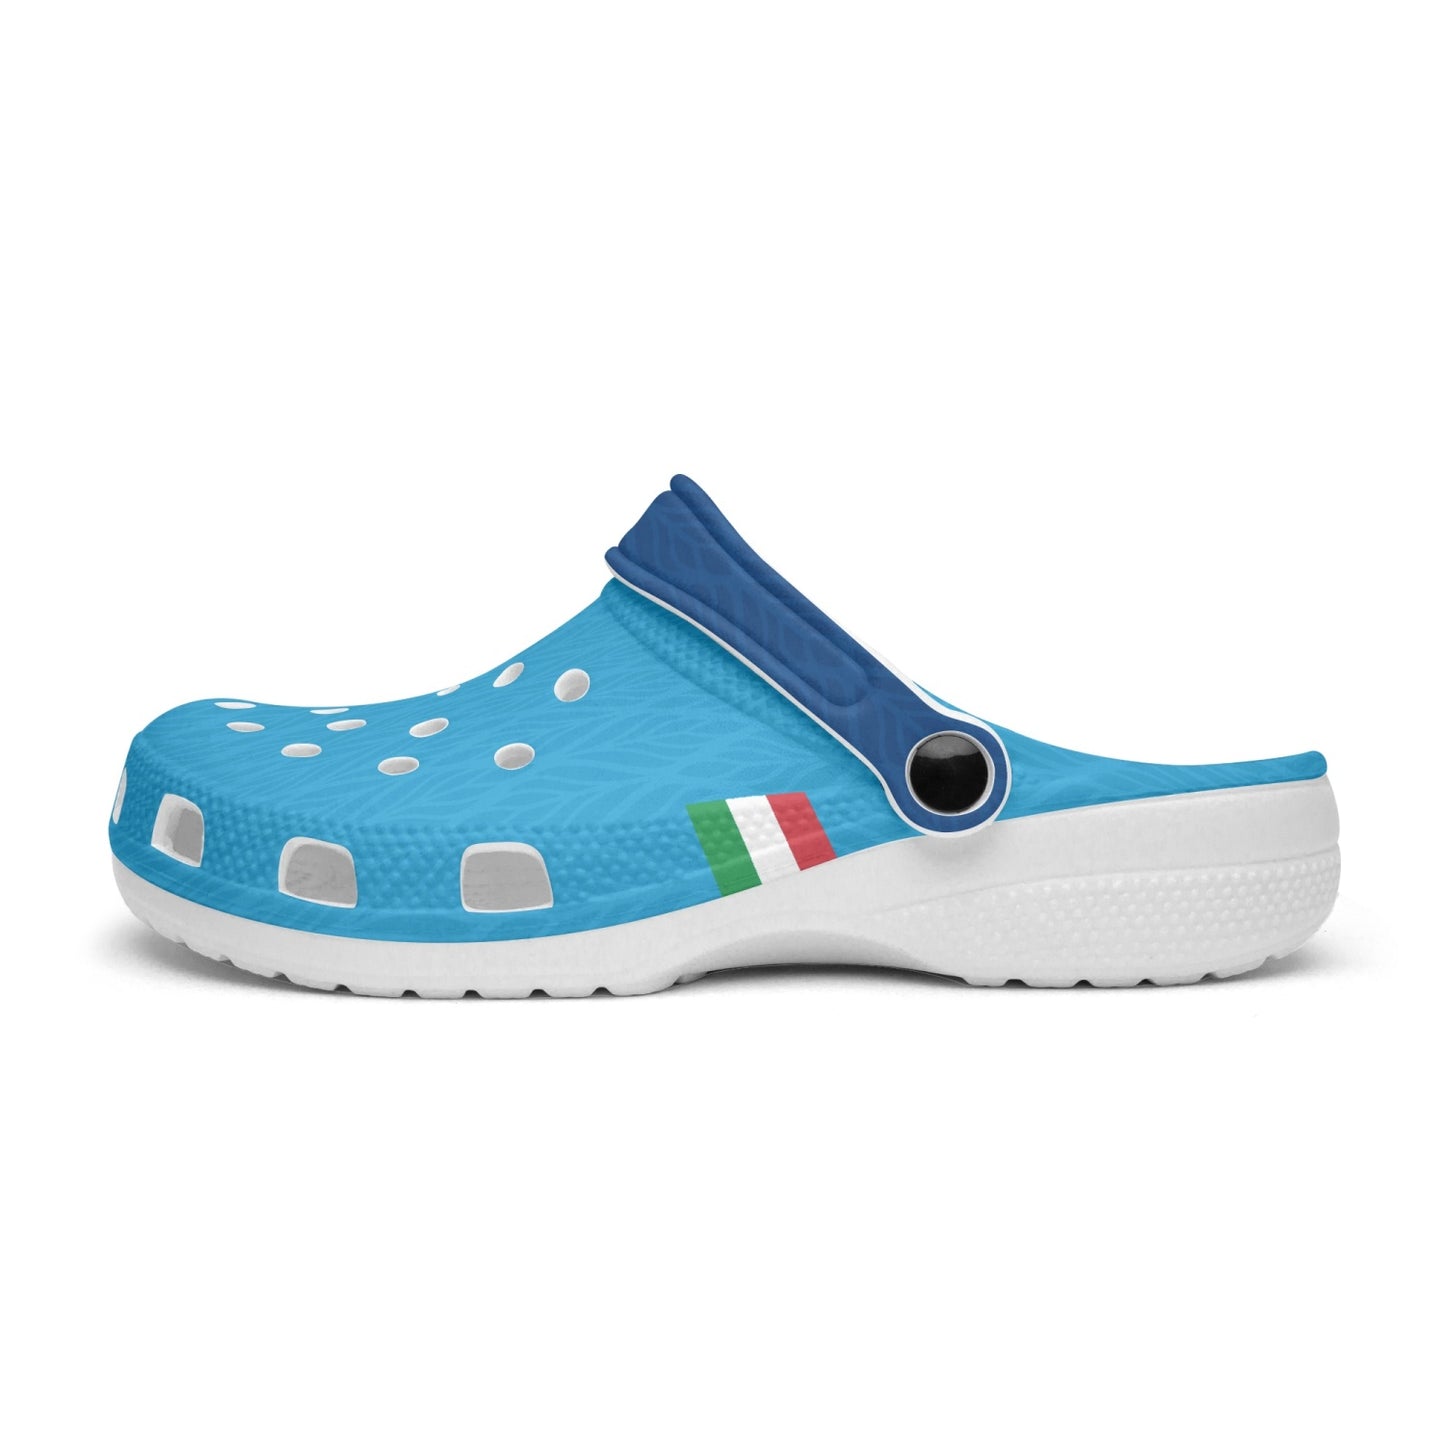 Napoli Clogs shoes